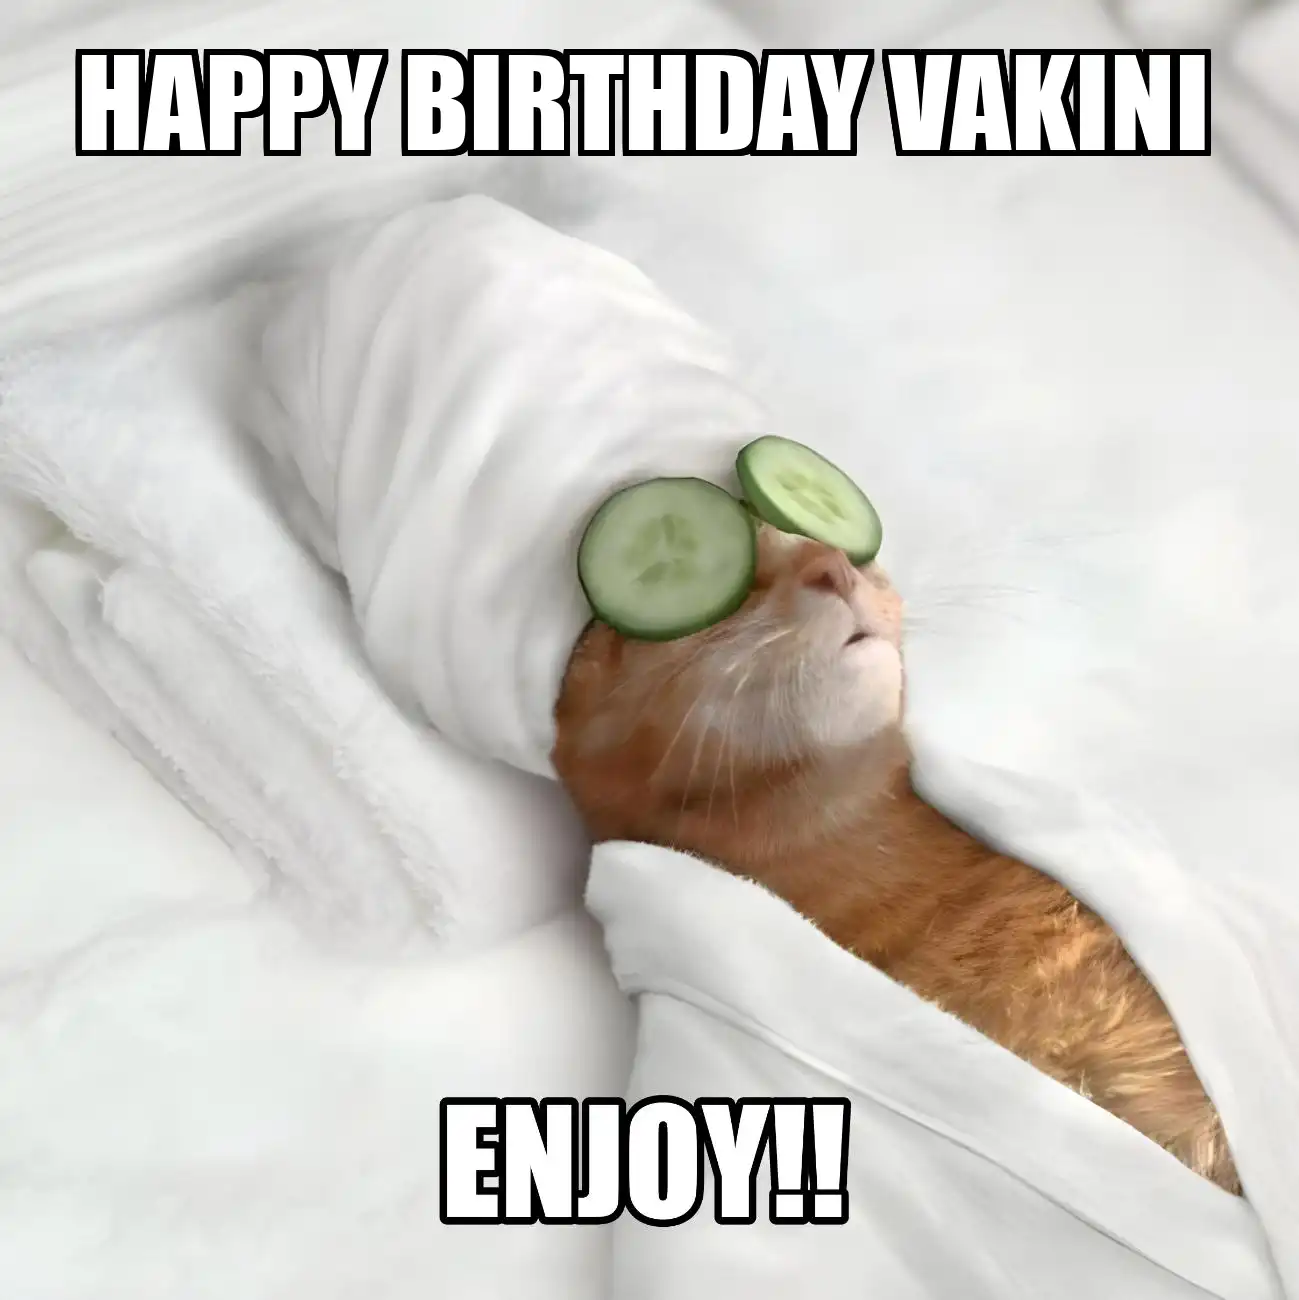 Happy Birthday Vakini Enjoy Cat Meme